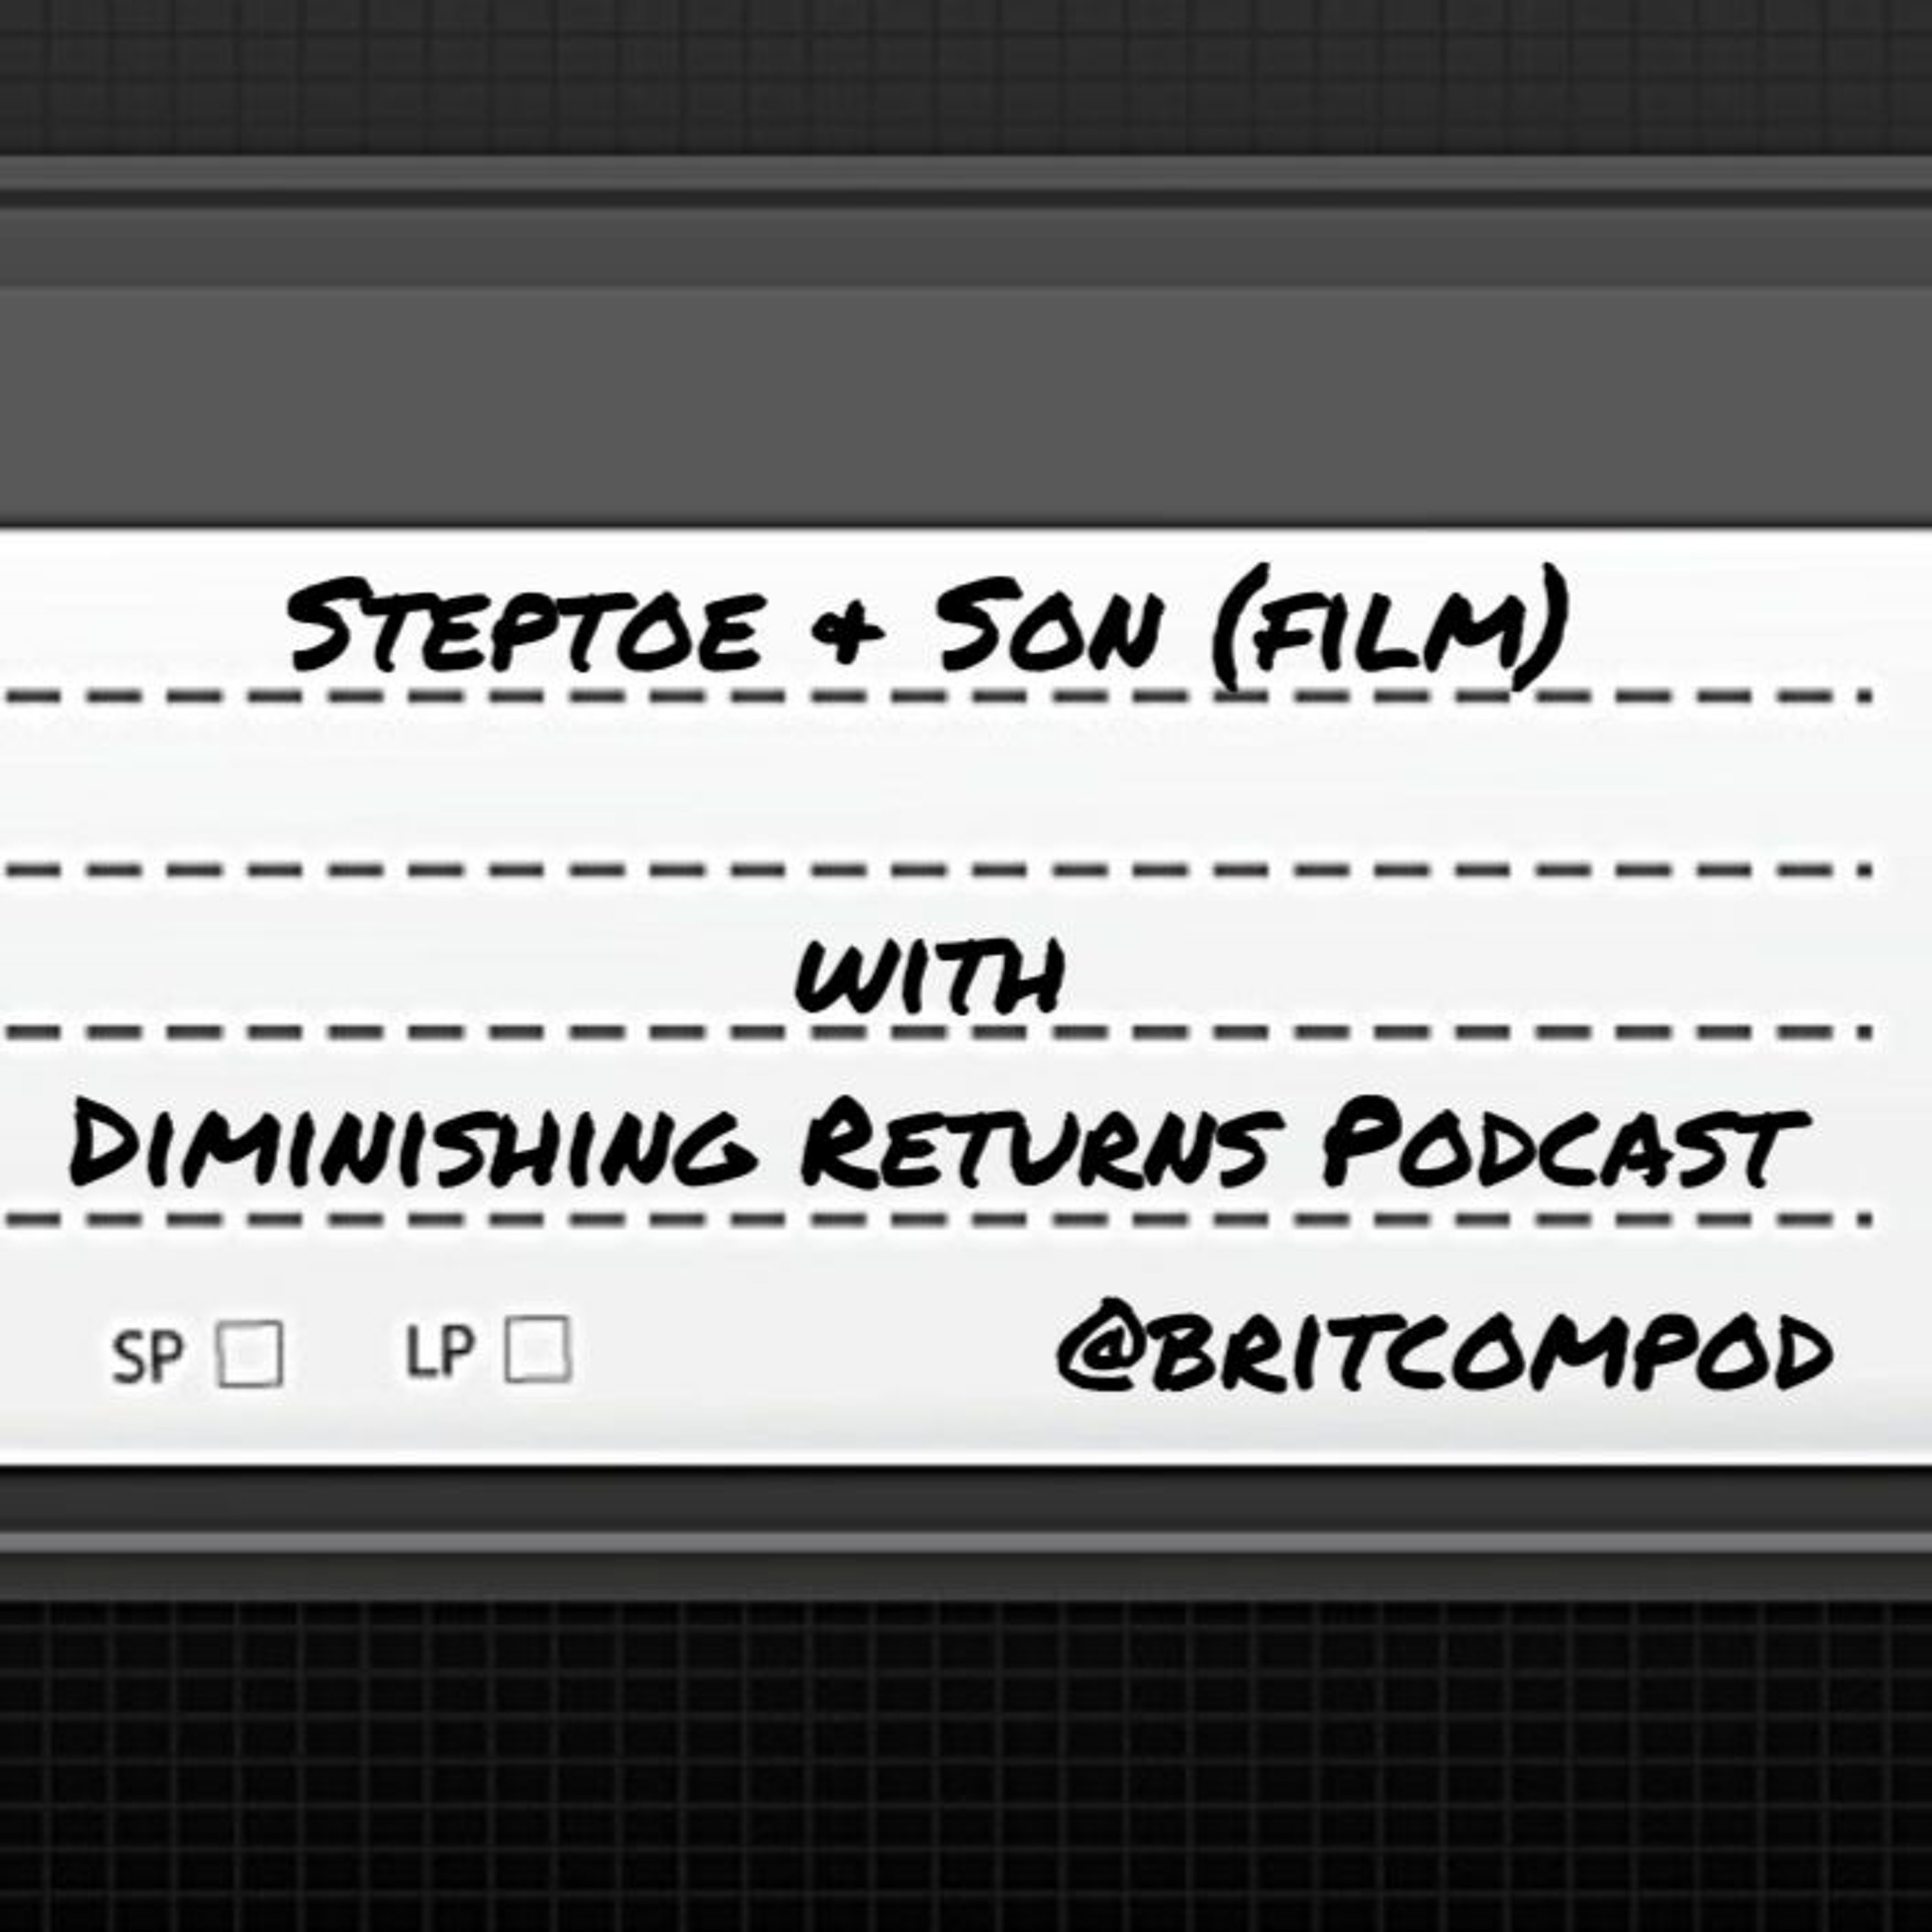 Steptoe & Son (film) with Diminishing Returns Podcast